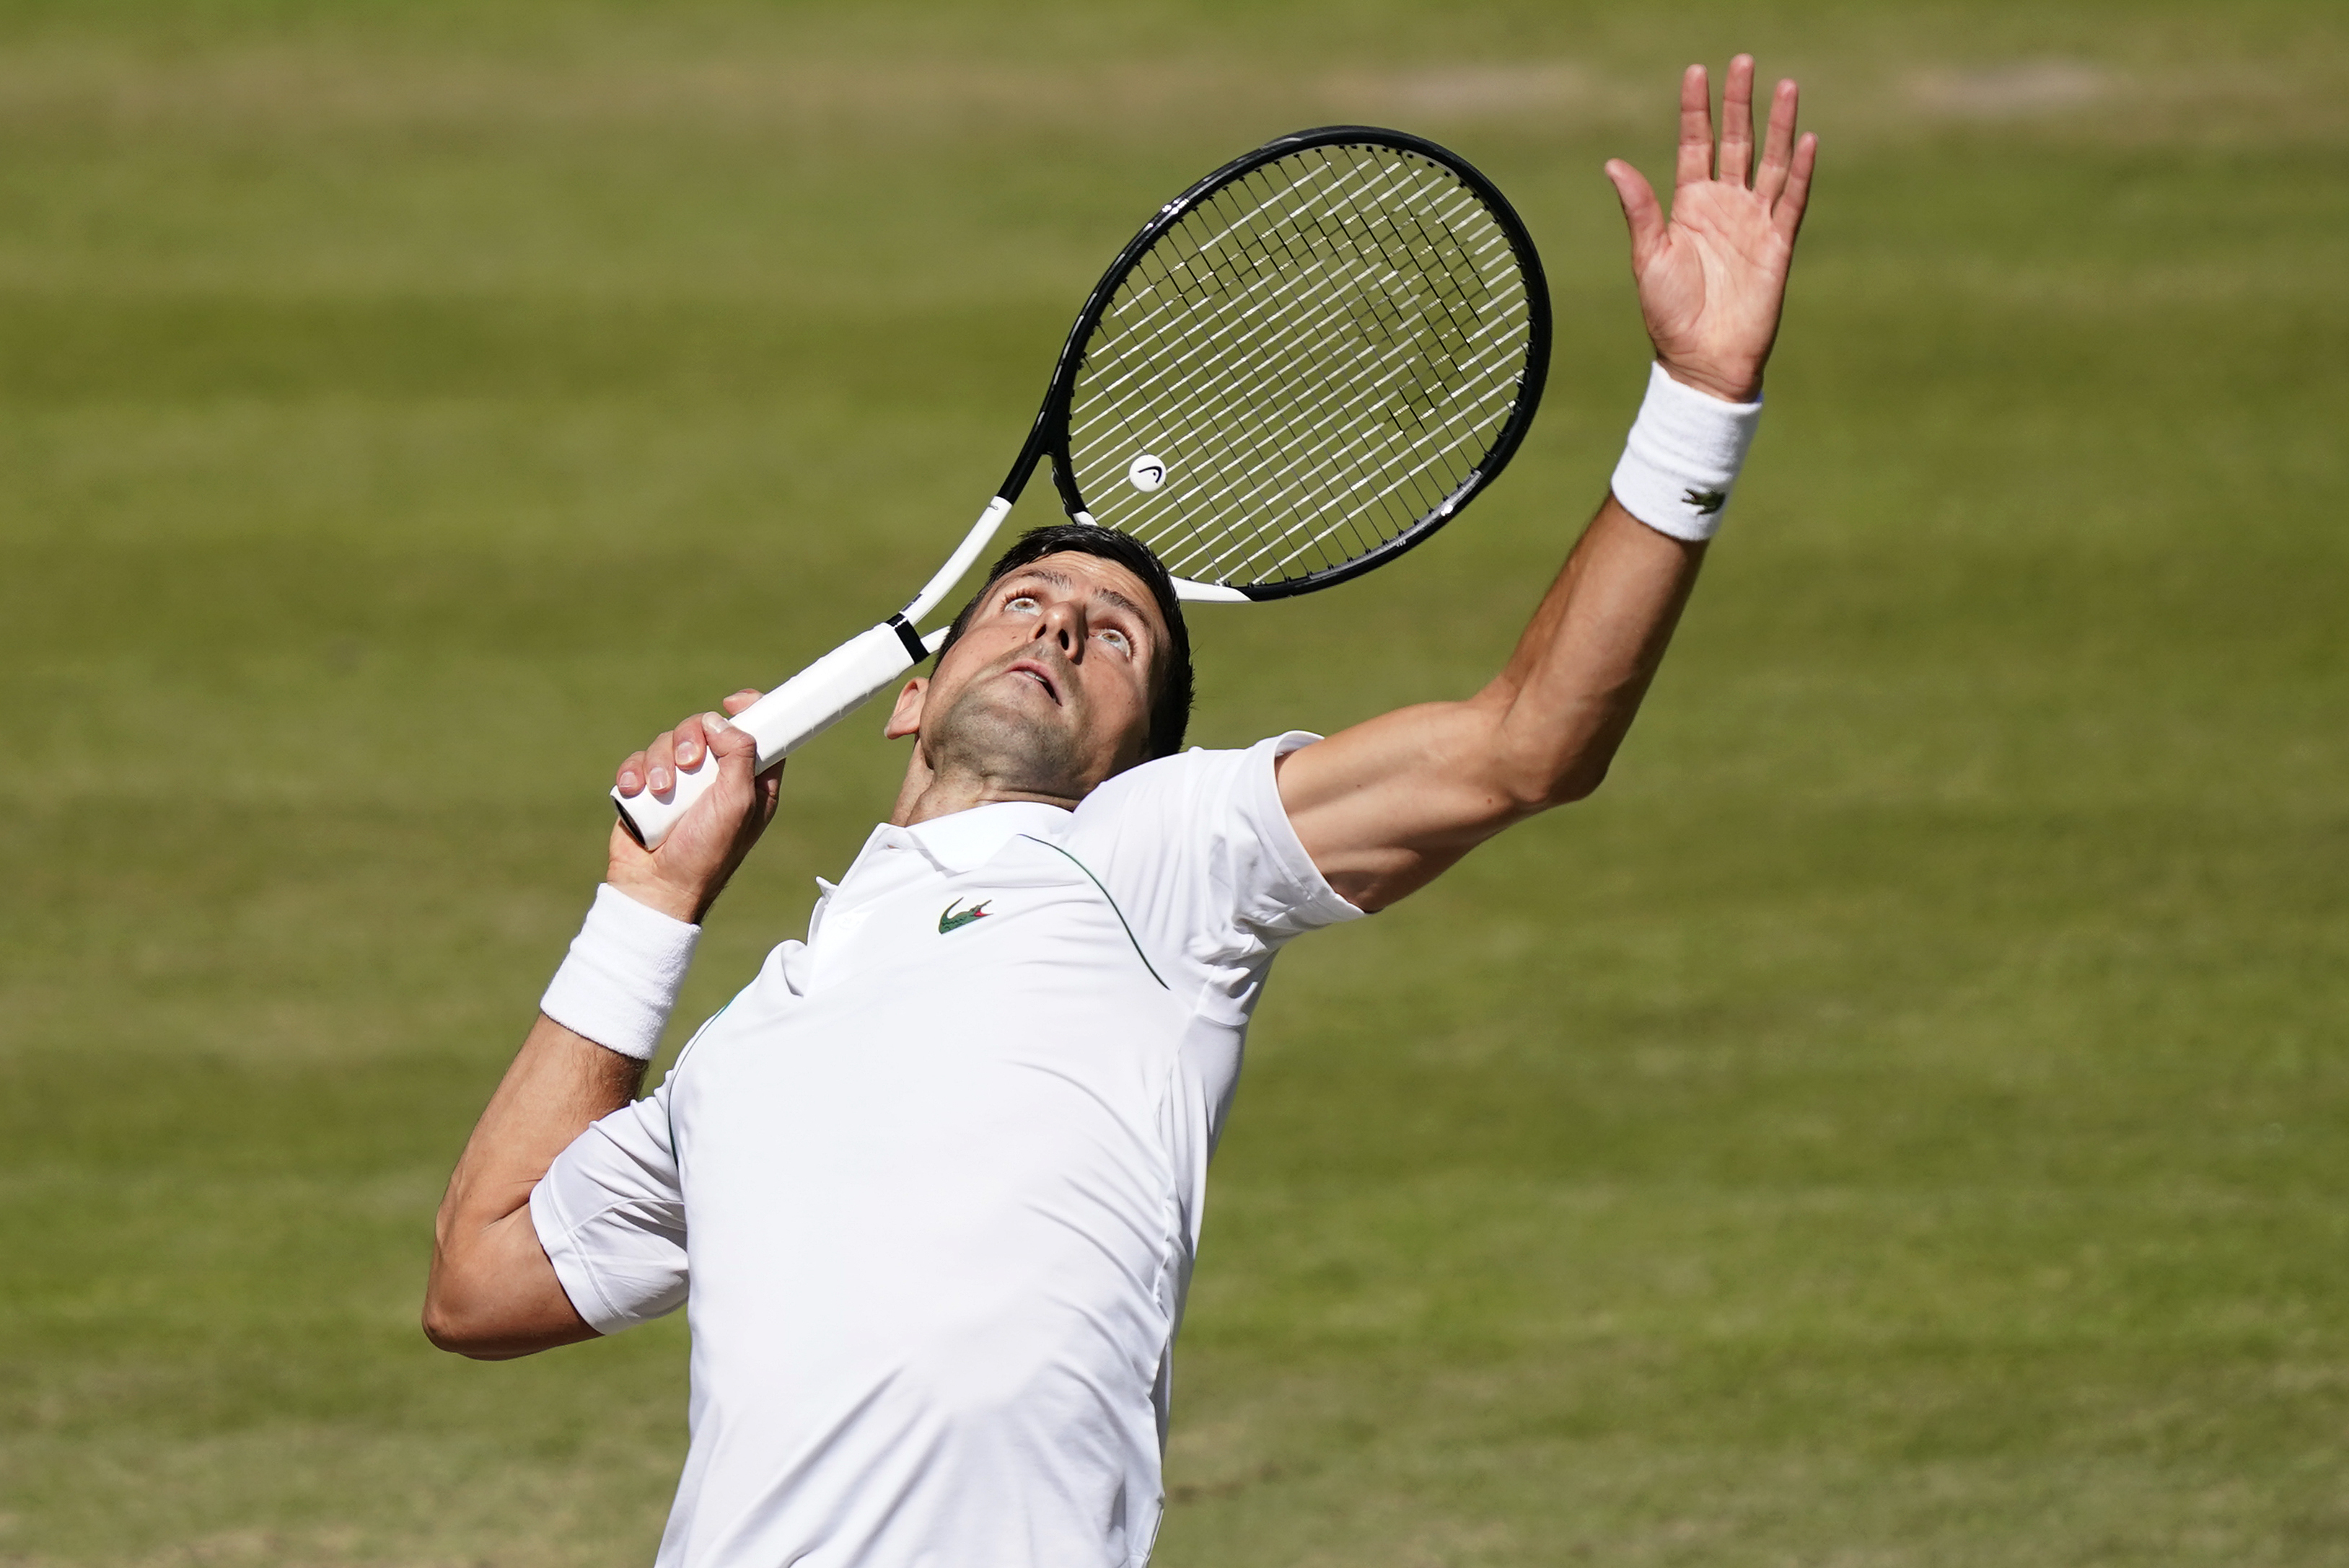 Wimbledon Tennis 2022 Men's Final: Novak Djokovic vs. Nick Kyrgios Predictions